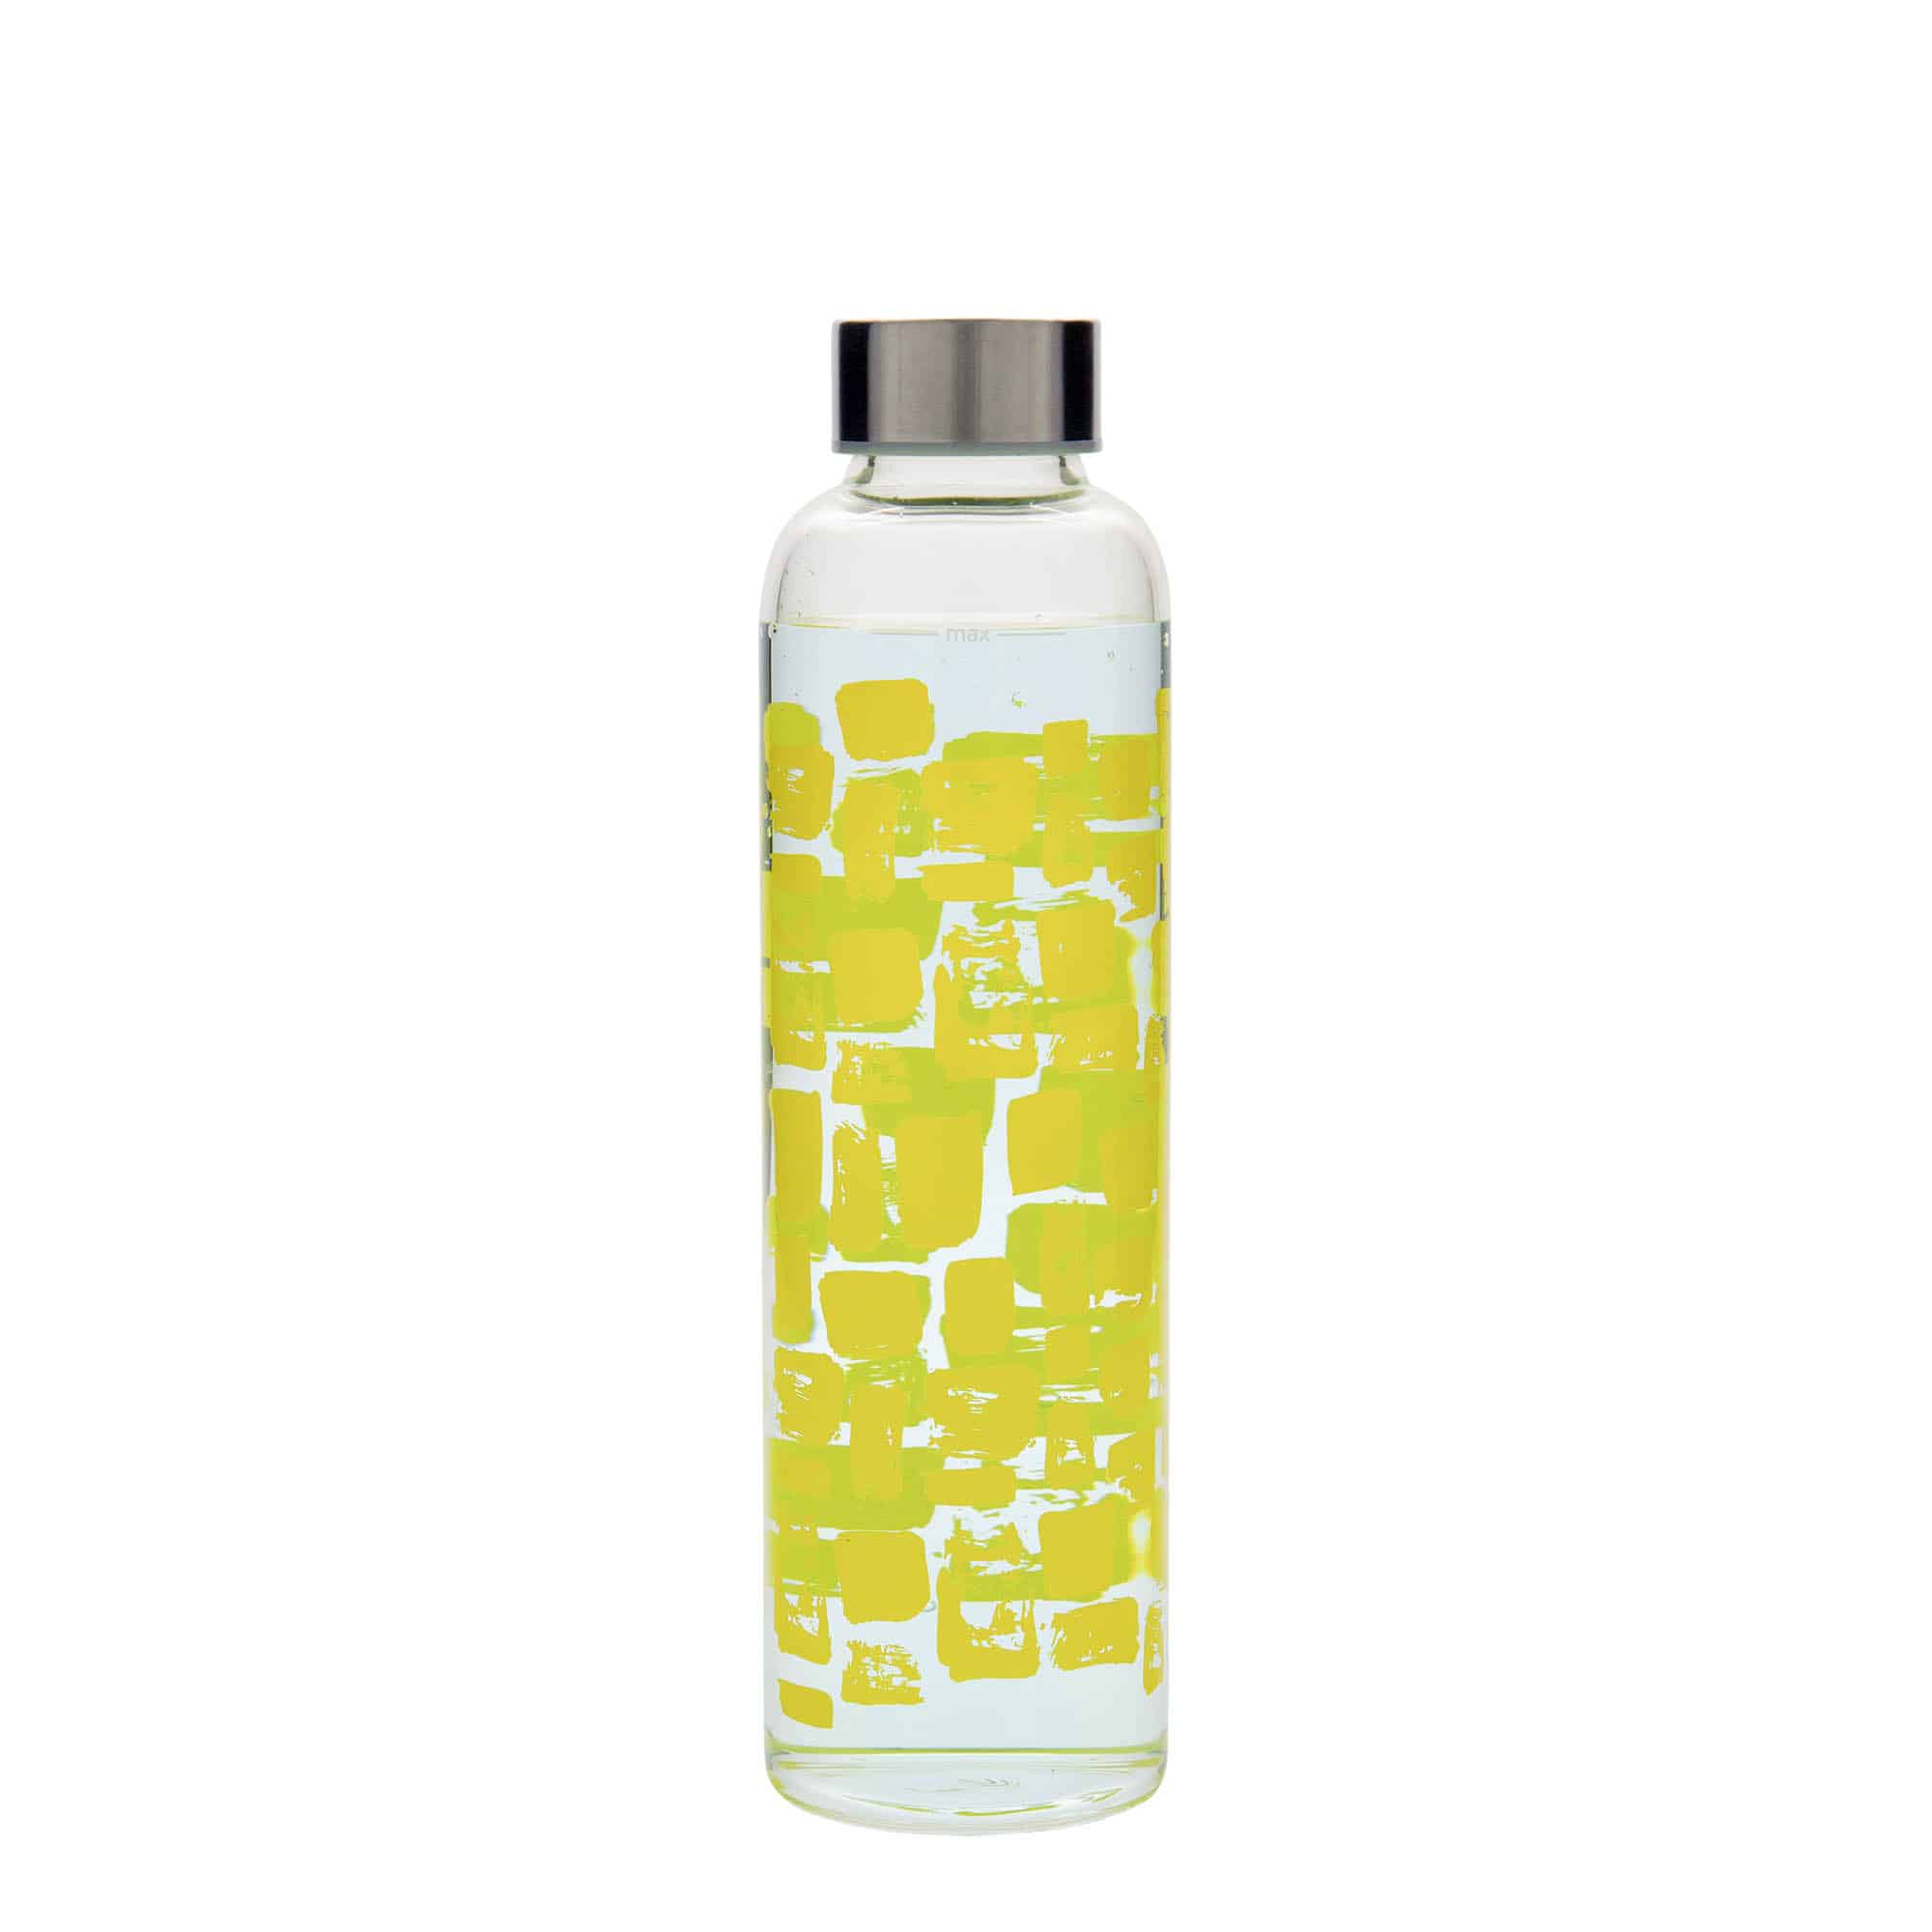 500 ml water bottle 'Perseus', print: yellow rectangles, closure: screw cap